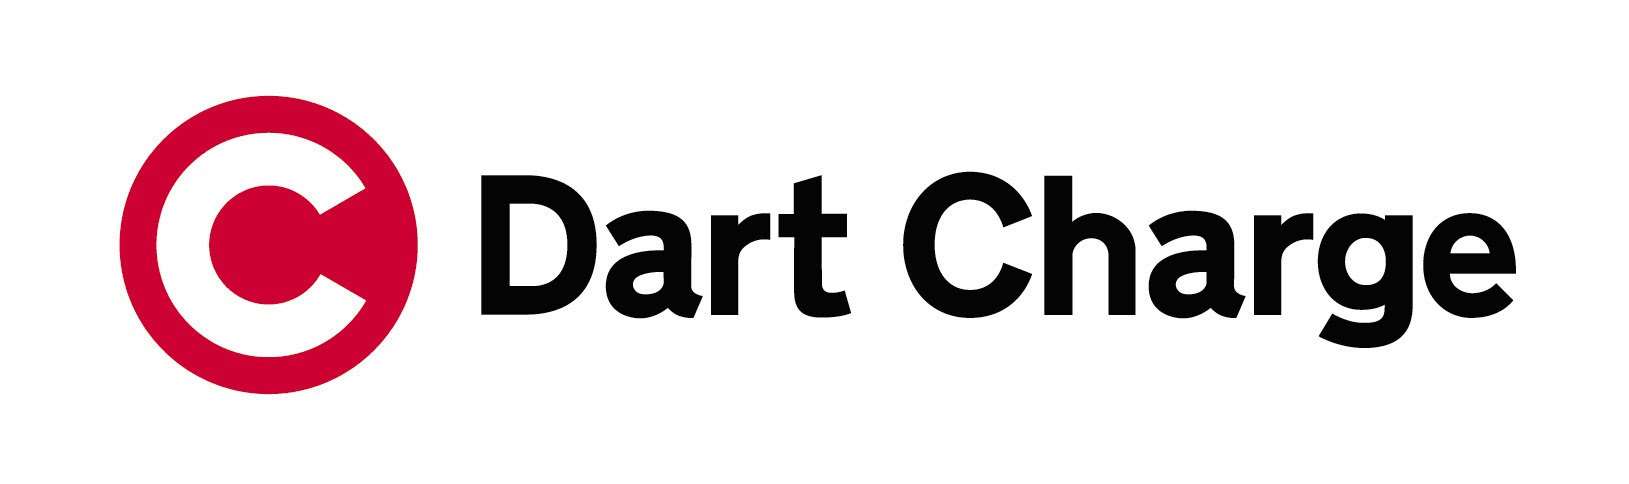 Dart Charge logo